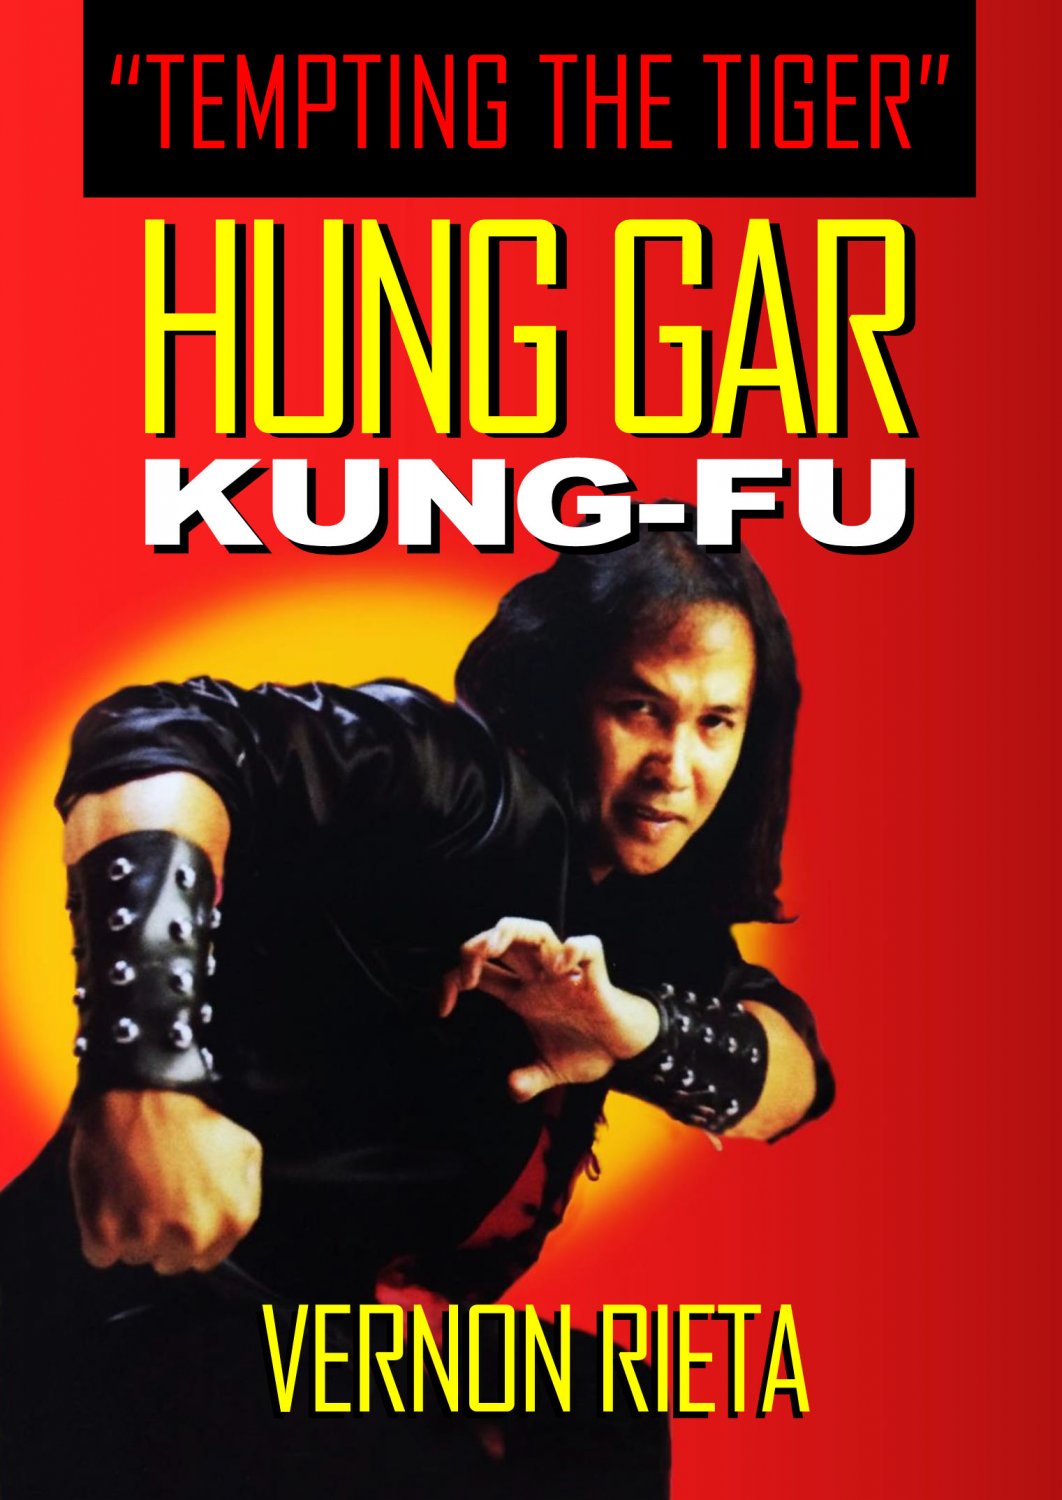 VD5194A HAGAR01-D  Hung Gar Kung Fu Tempting Tiger DVD Rieta